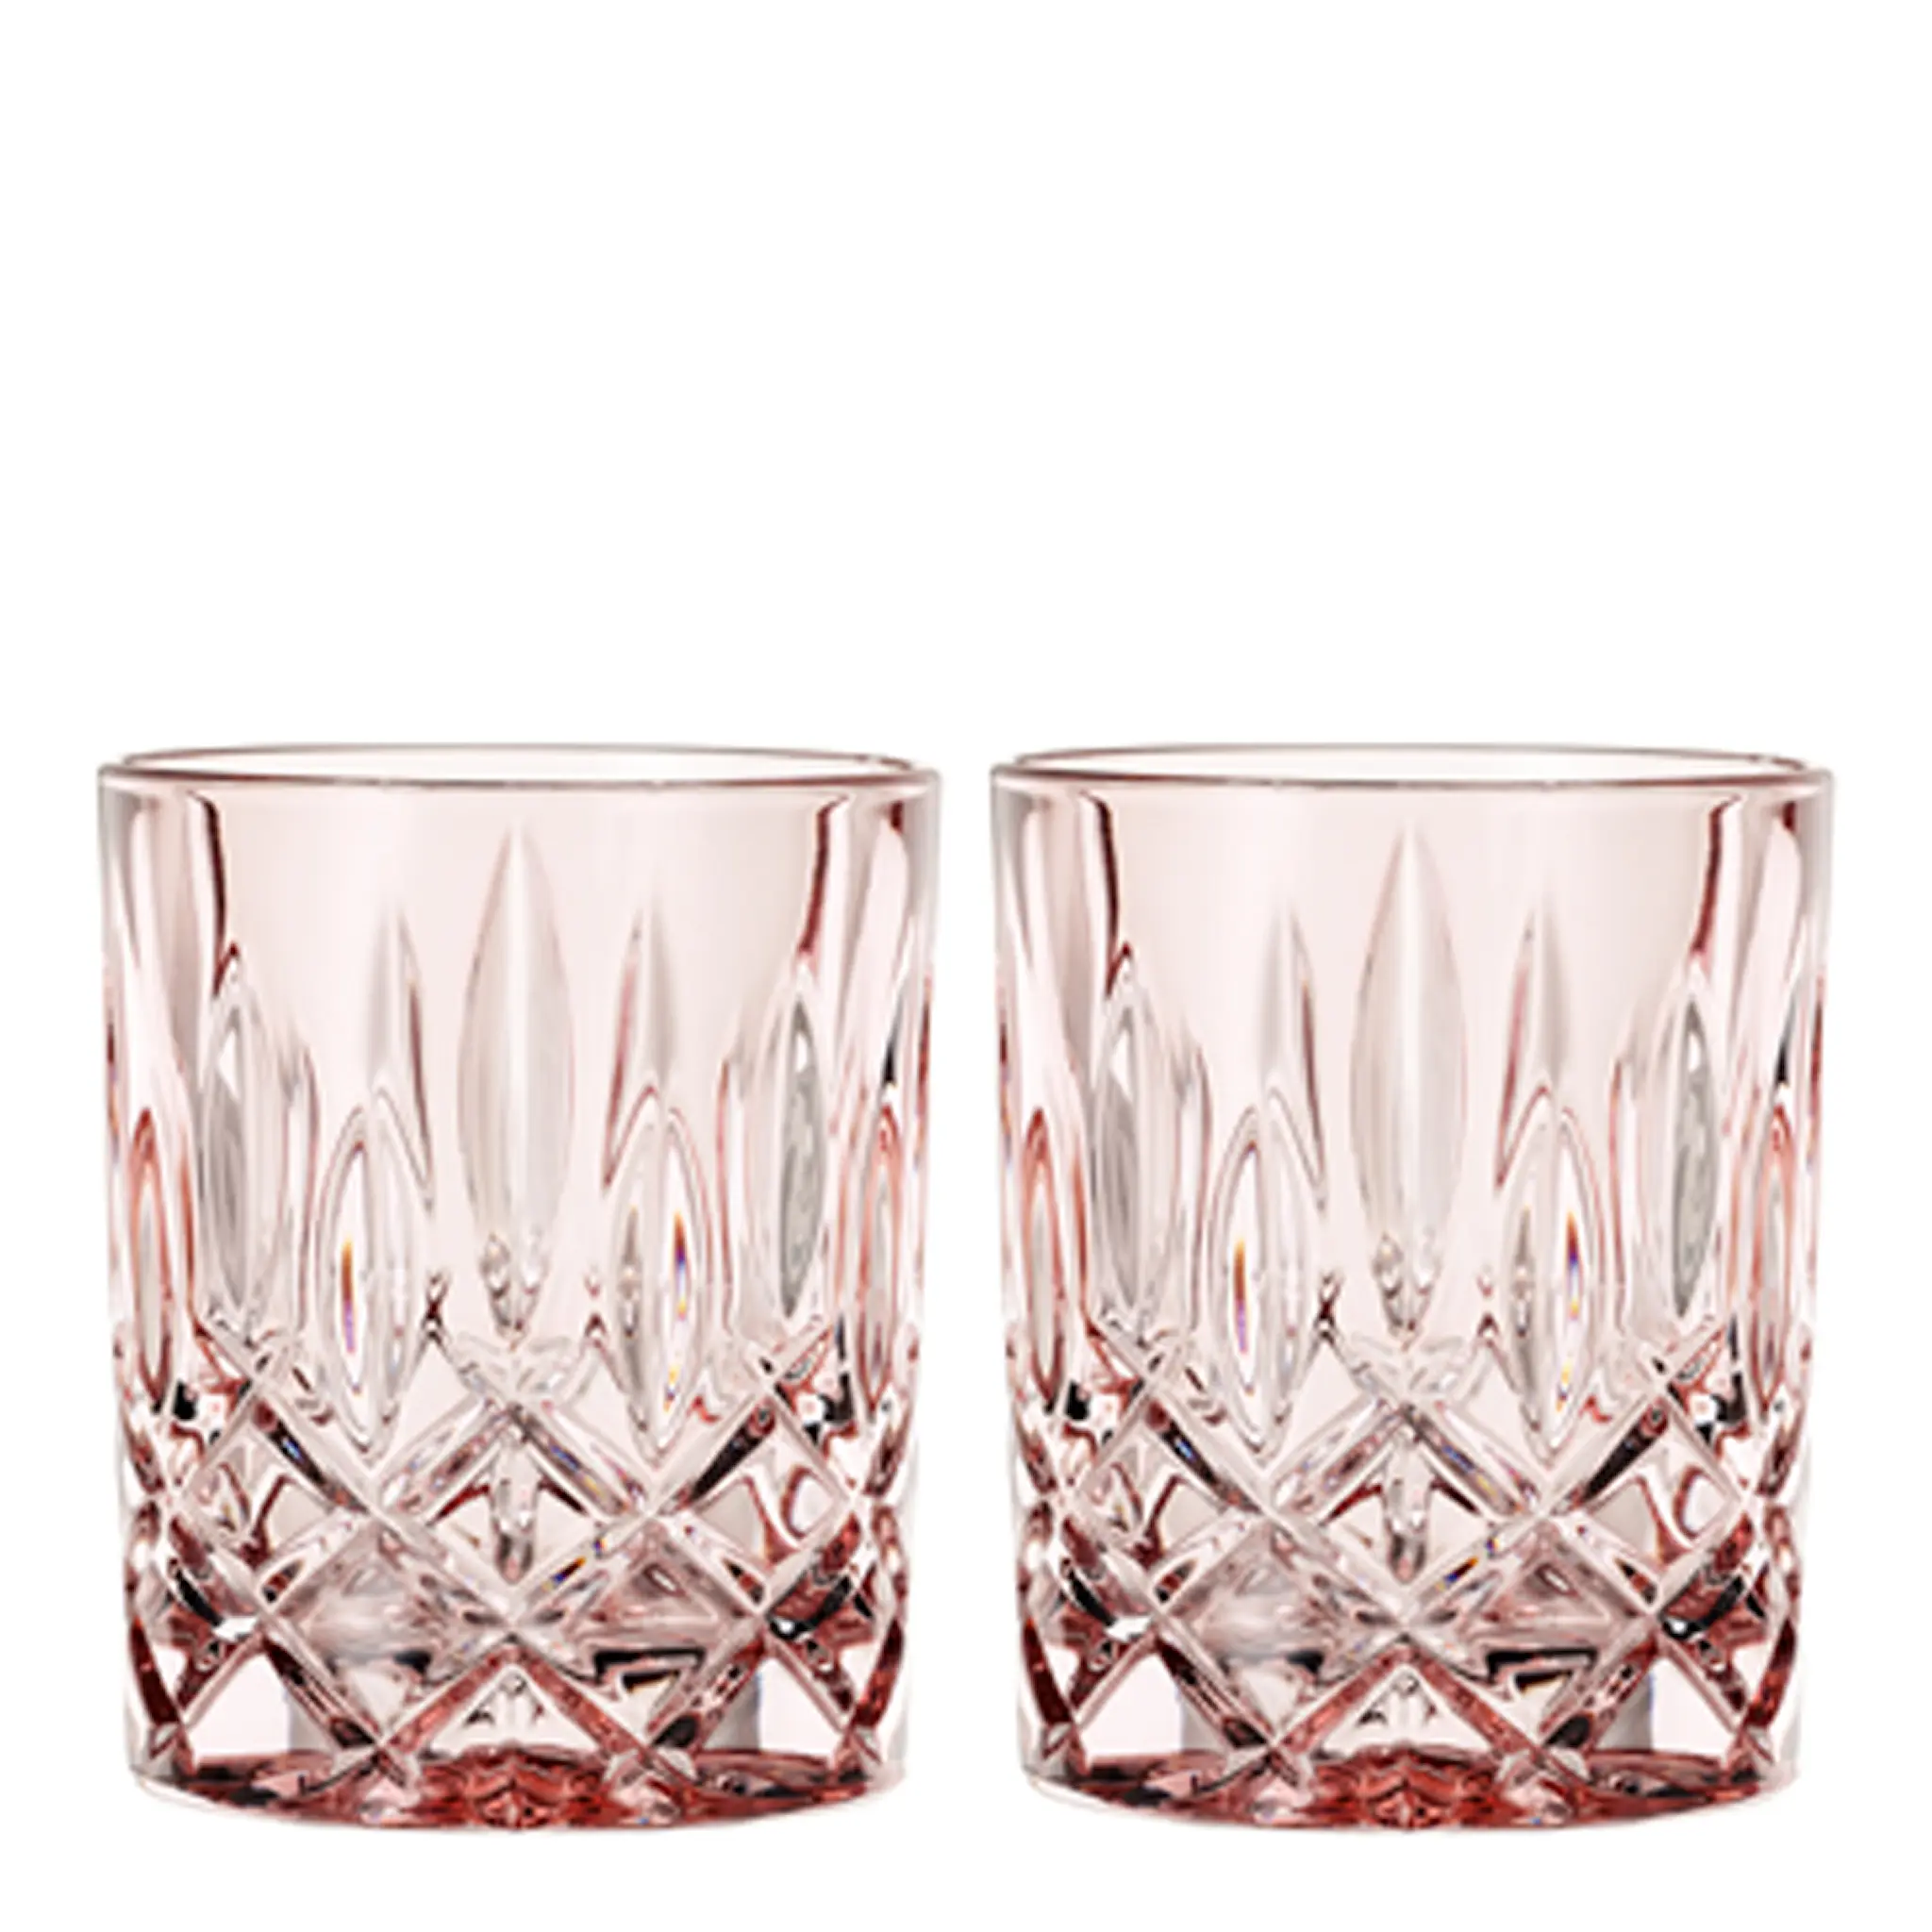 Nachtmann Noblesse whiskyglass 29,5 cl 2 stk rosé